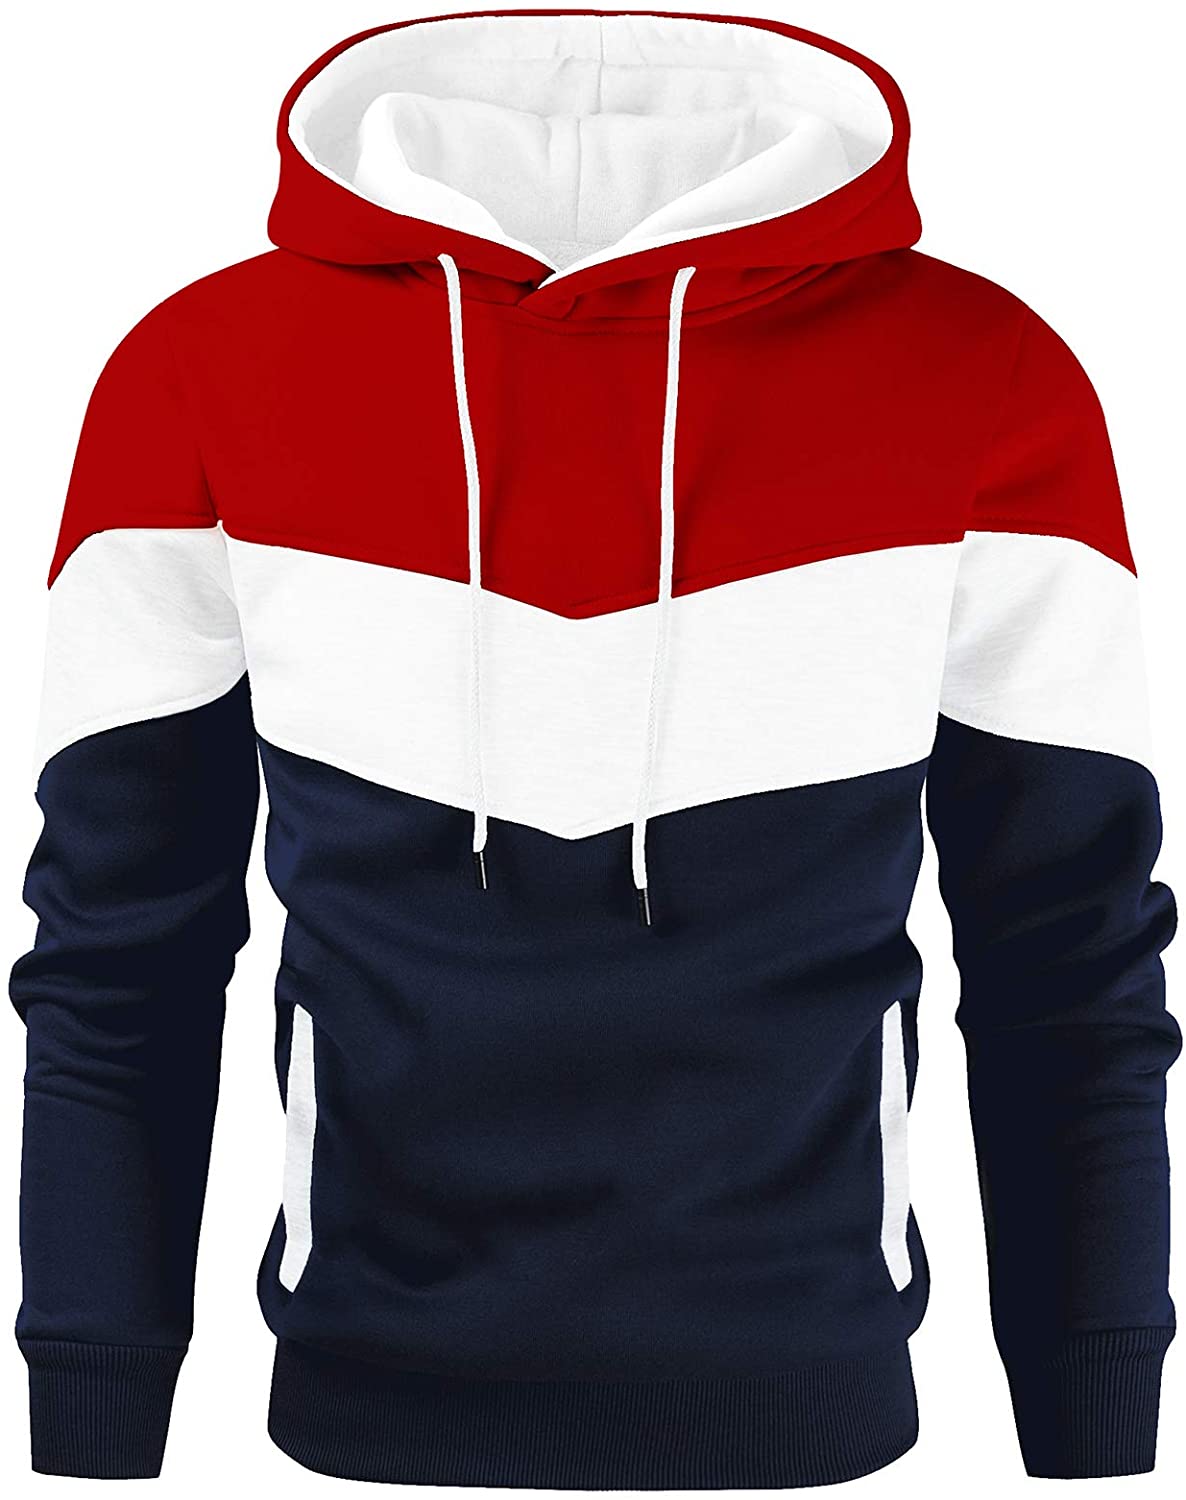 Gesean Men's Novelty Color Block Pullover Fleece Hoodie Long Sleeve Casual Sweatshirt with Pocket 